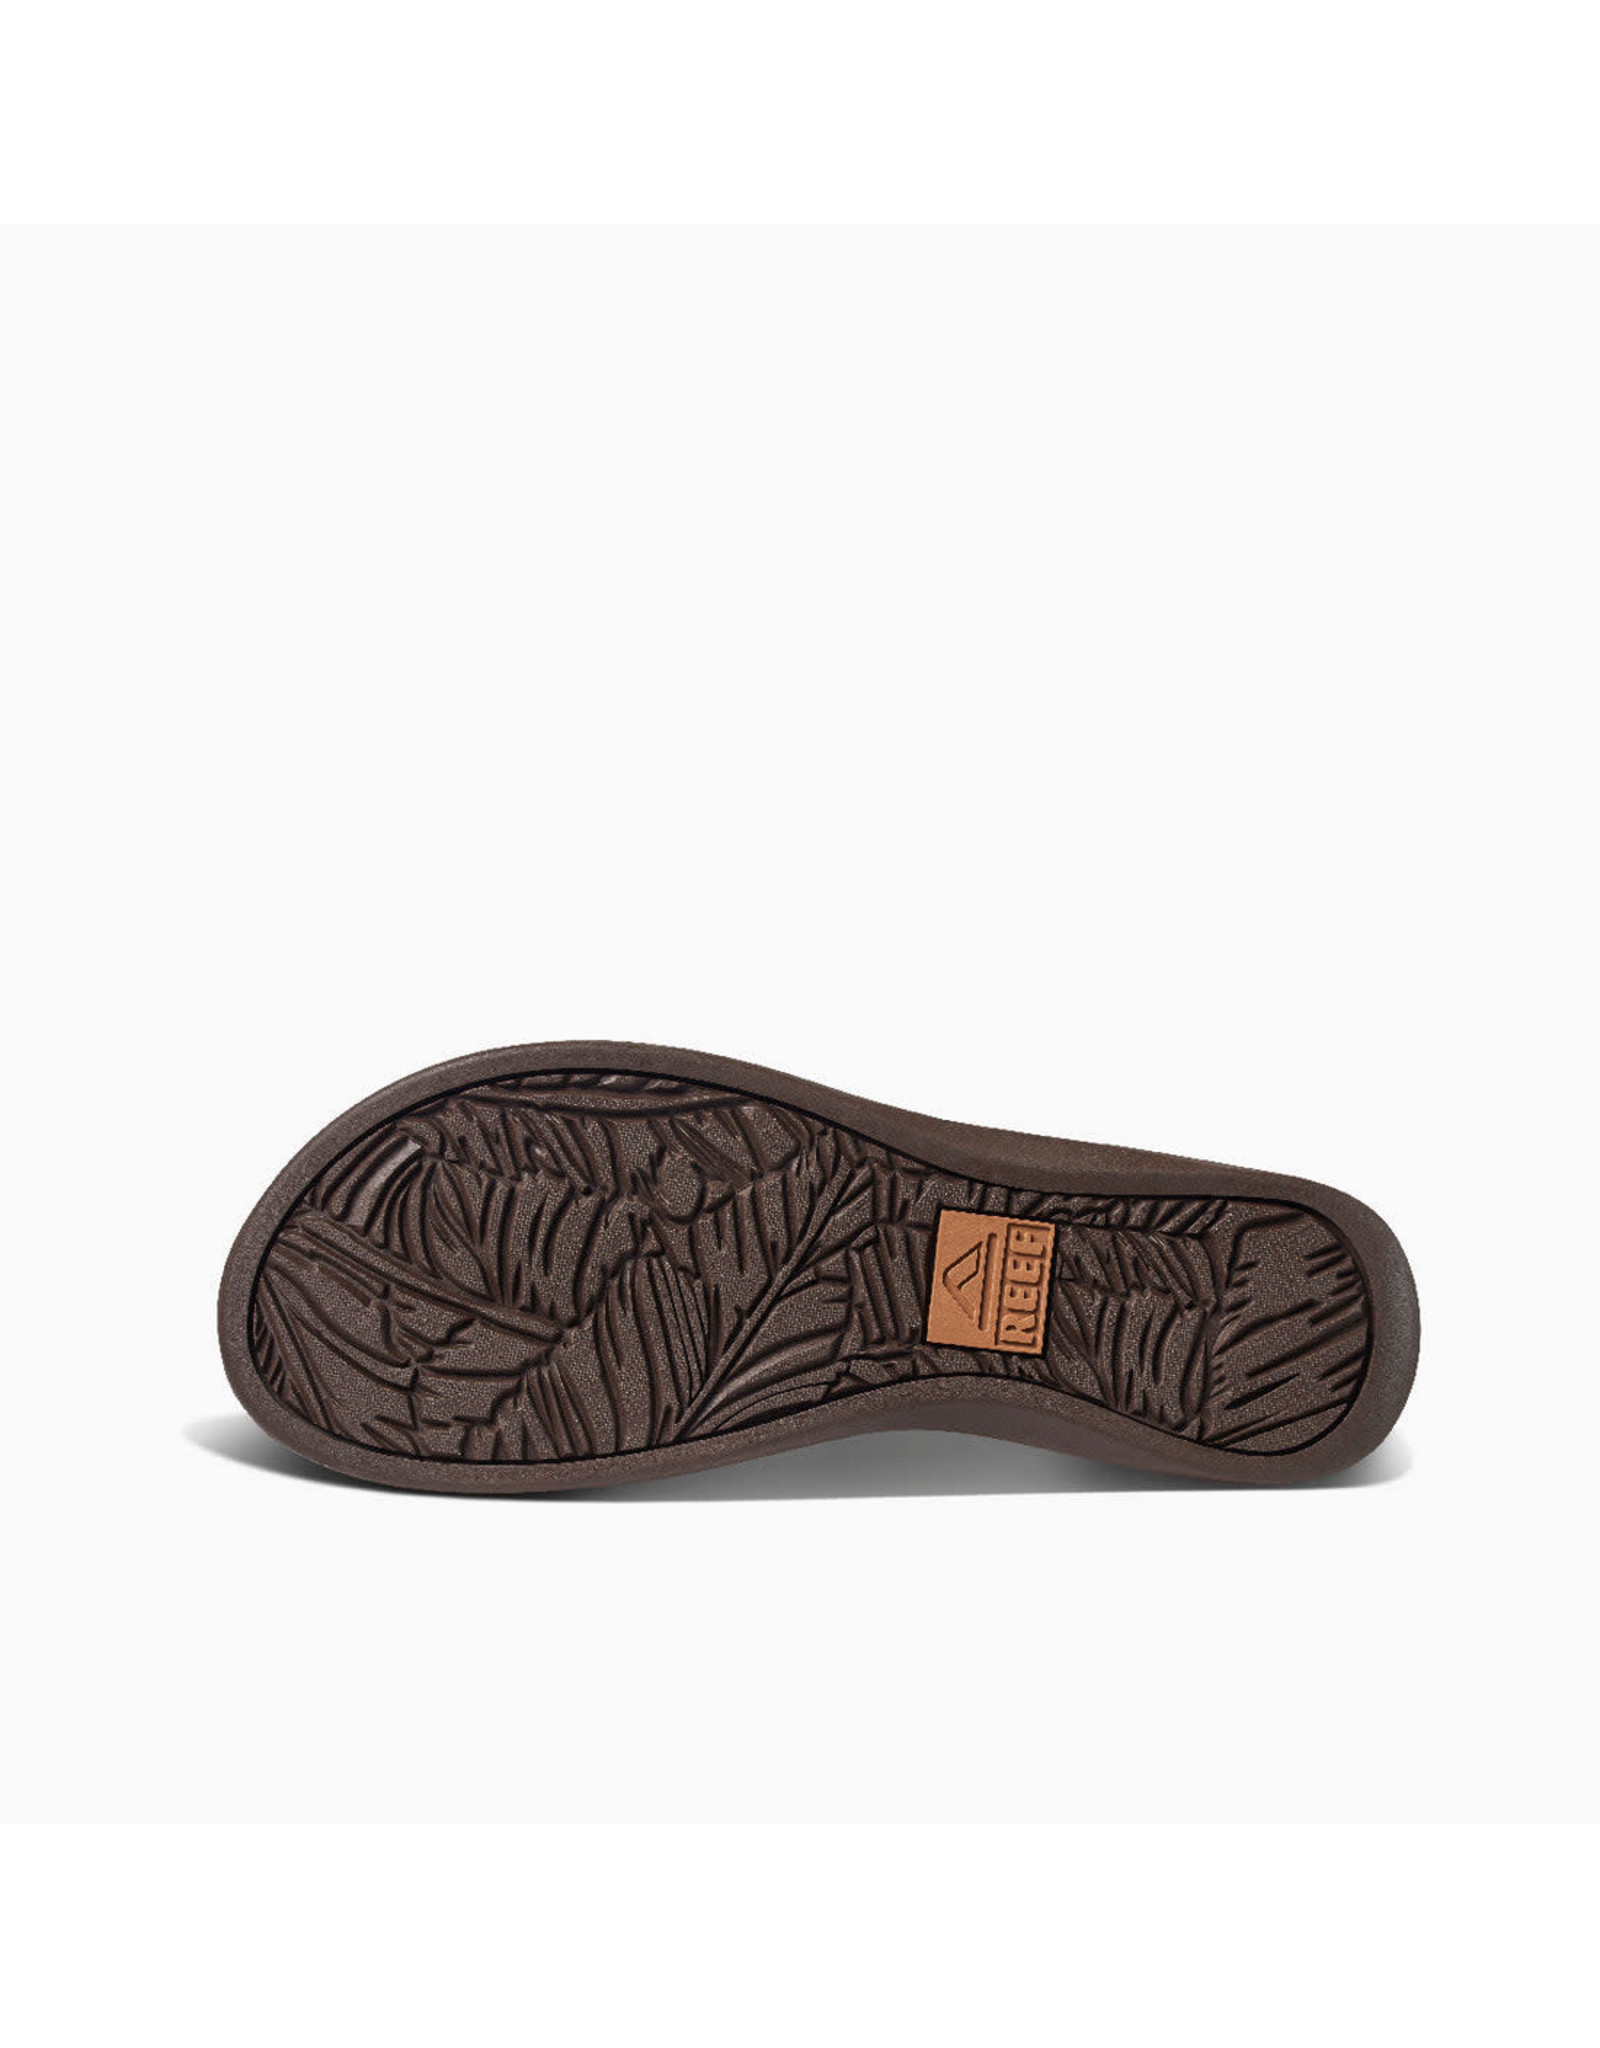 REEF Reef Women's Pacific Leather Flip Flop Sandal - Caramel